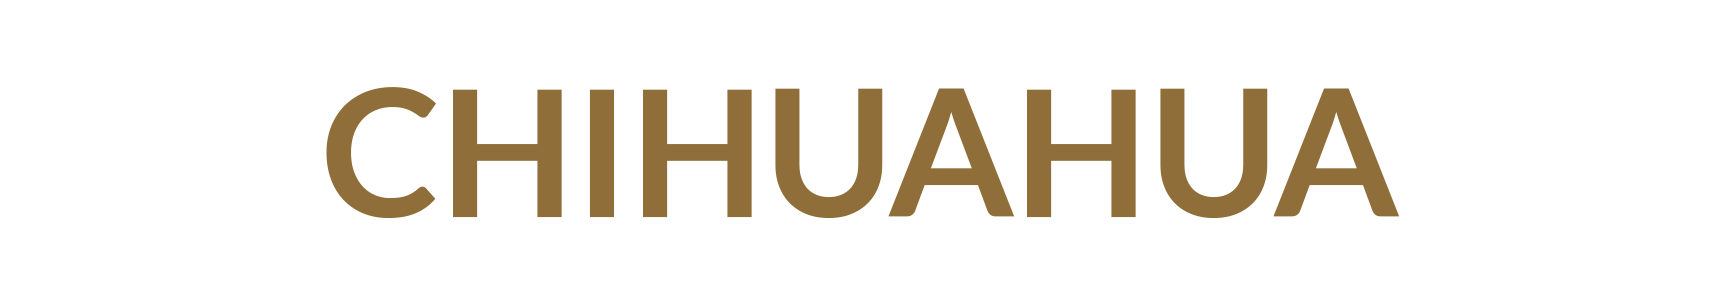 chihuahua_iniciativa-de-ley-2